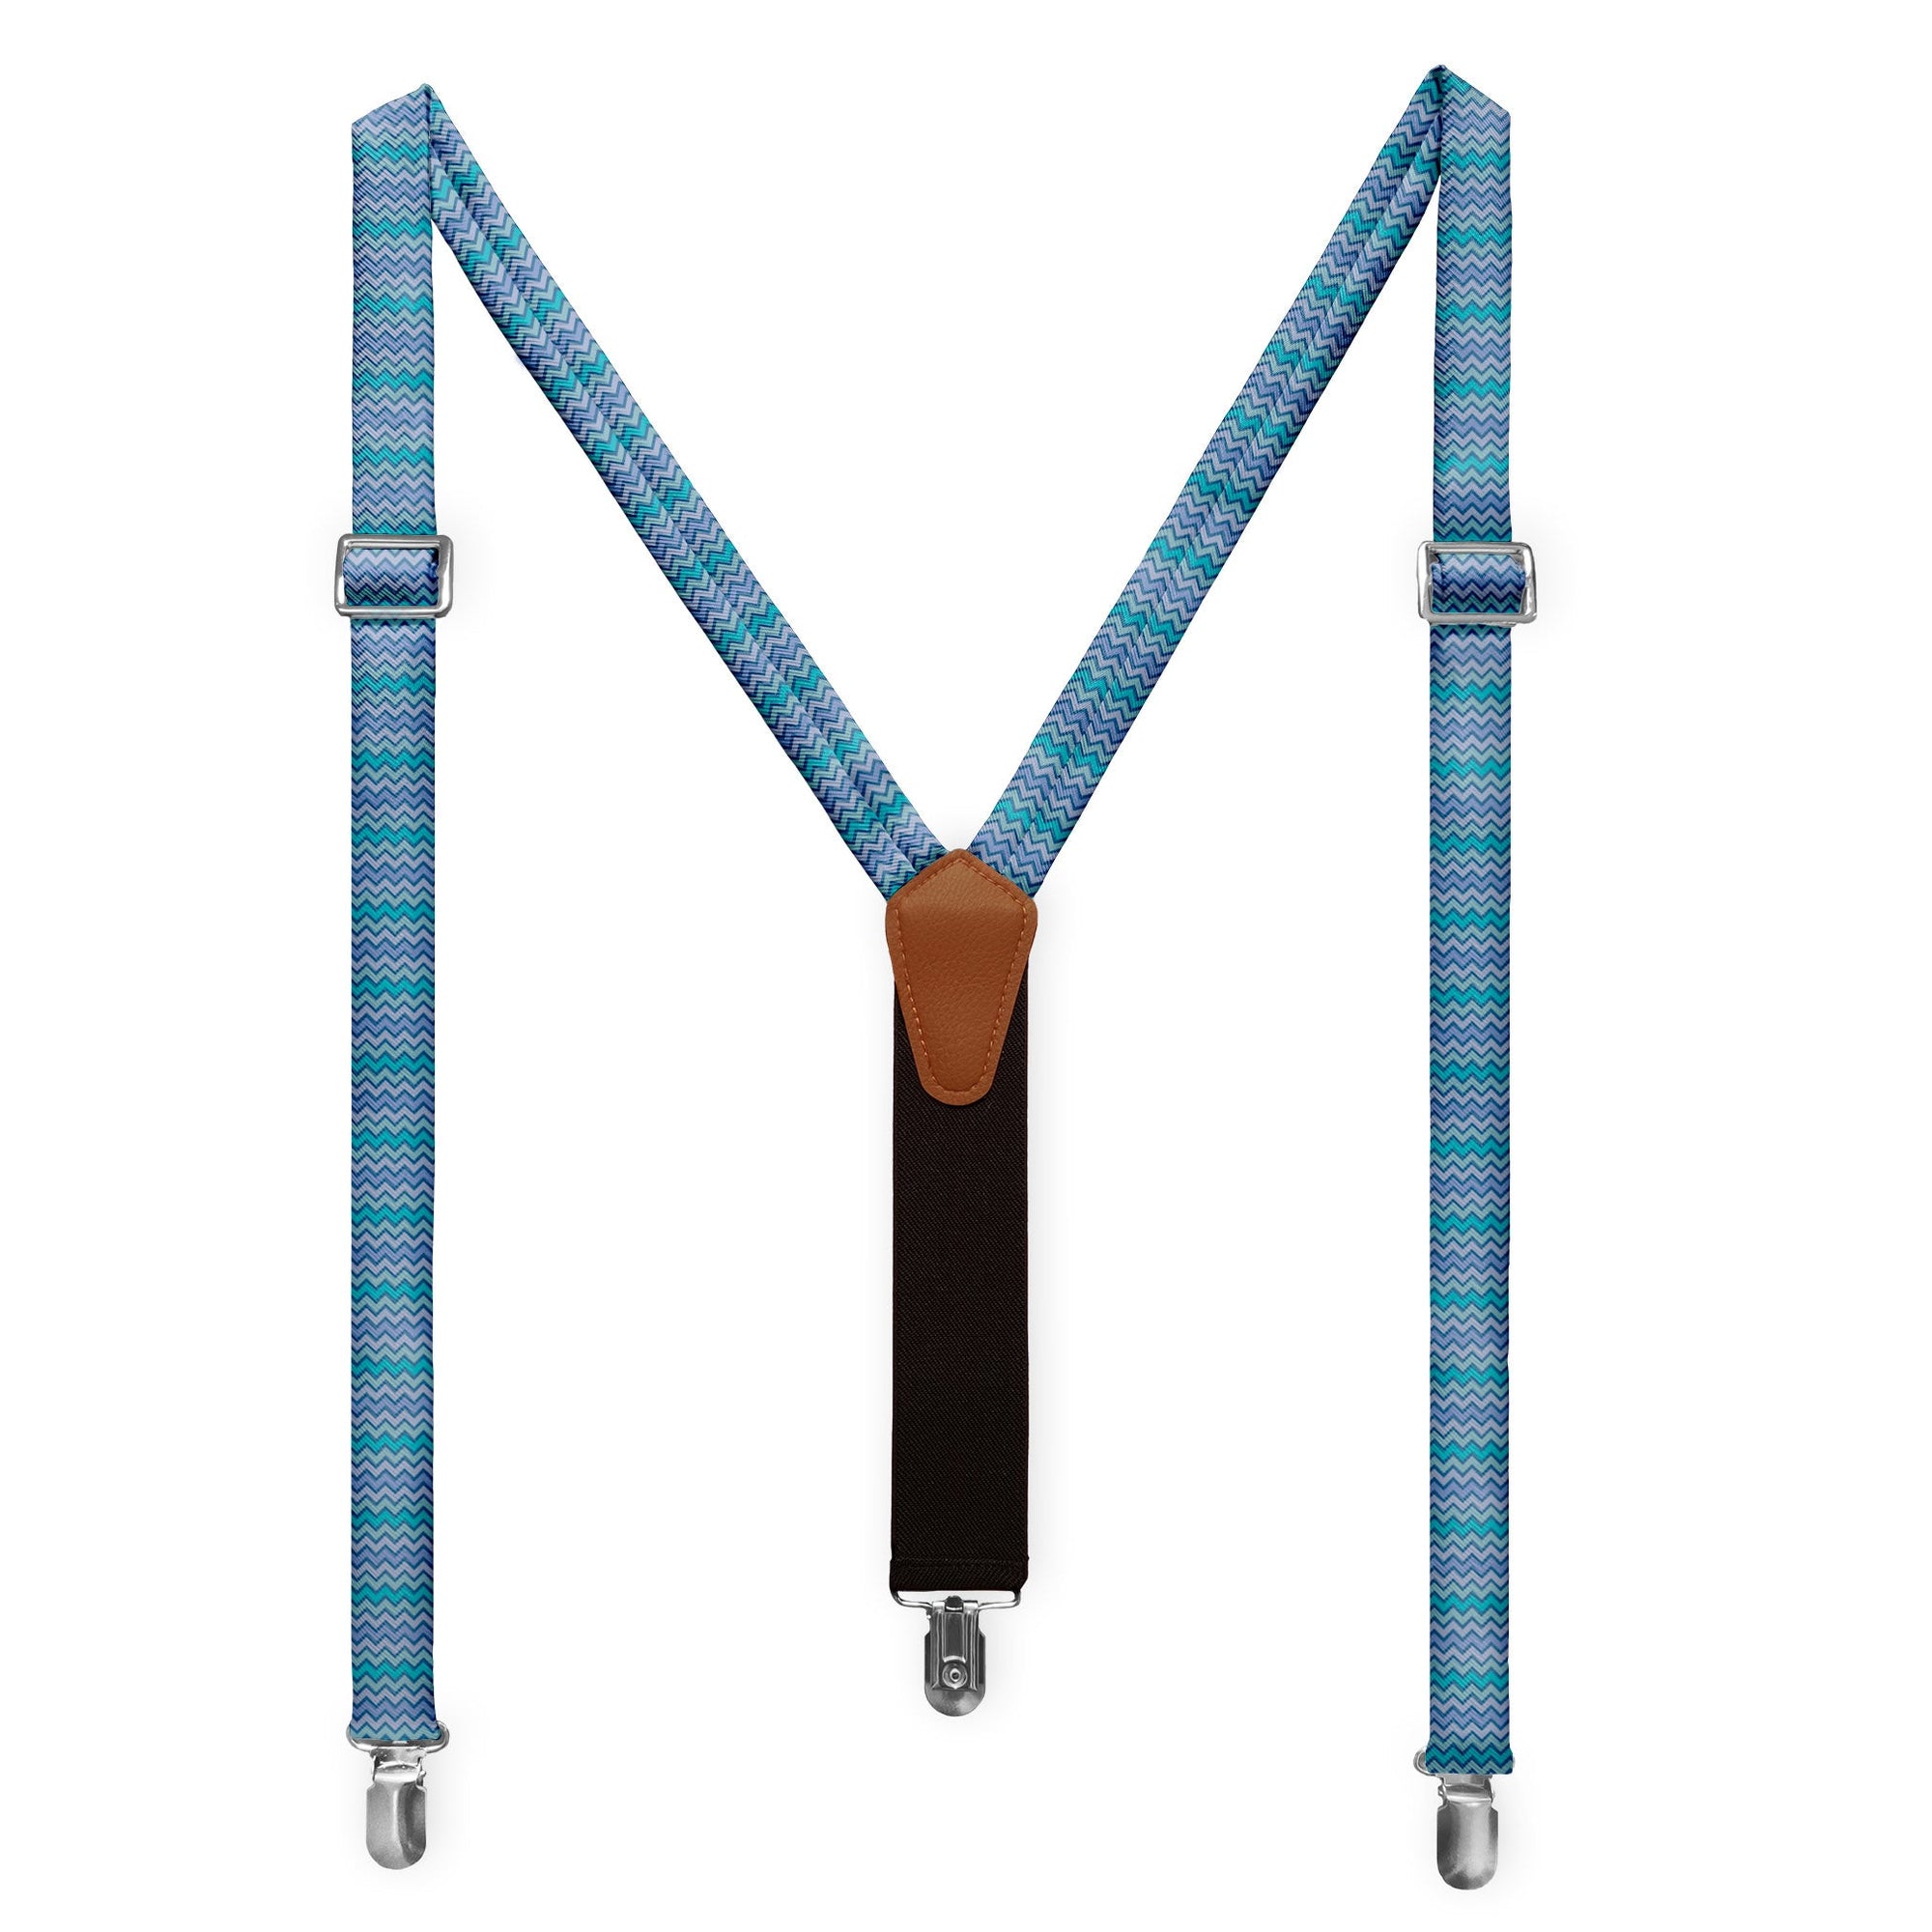 Quake Geometric Suspenders -  -  - Knotty Tie Co.